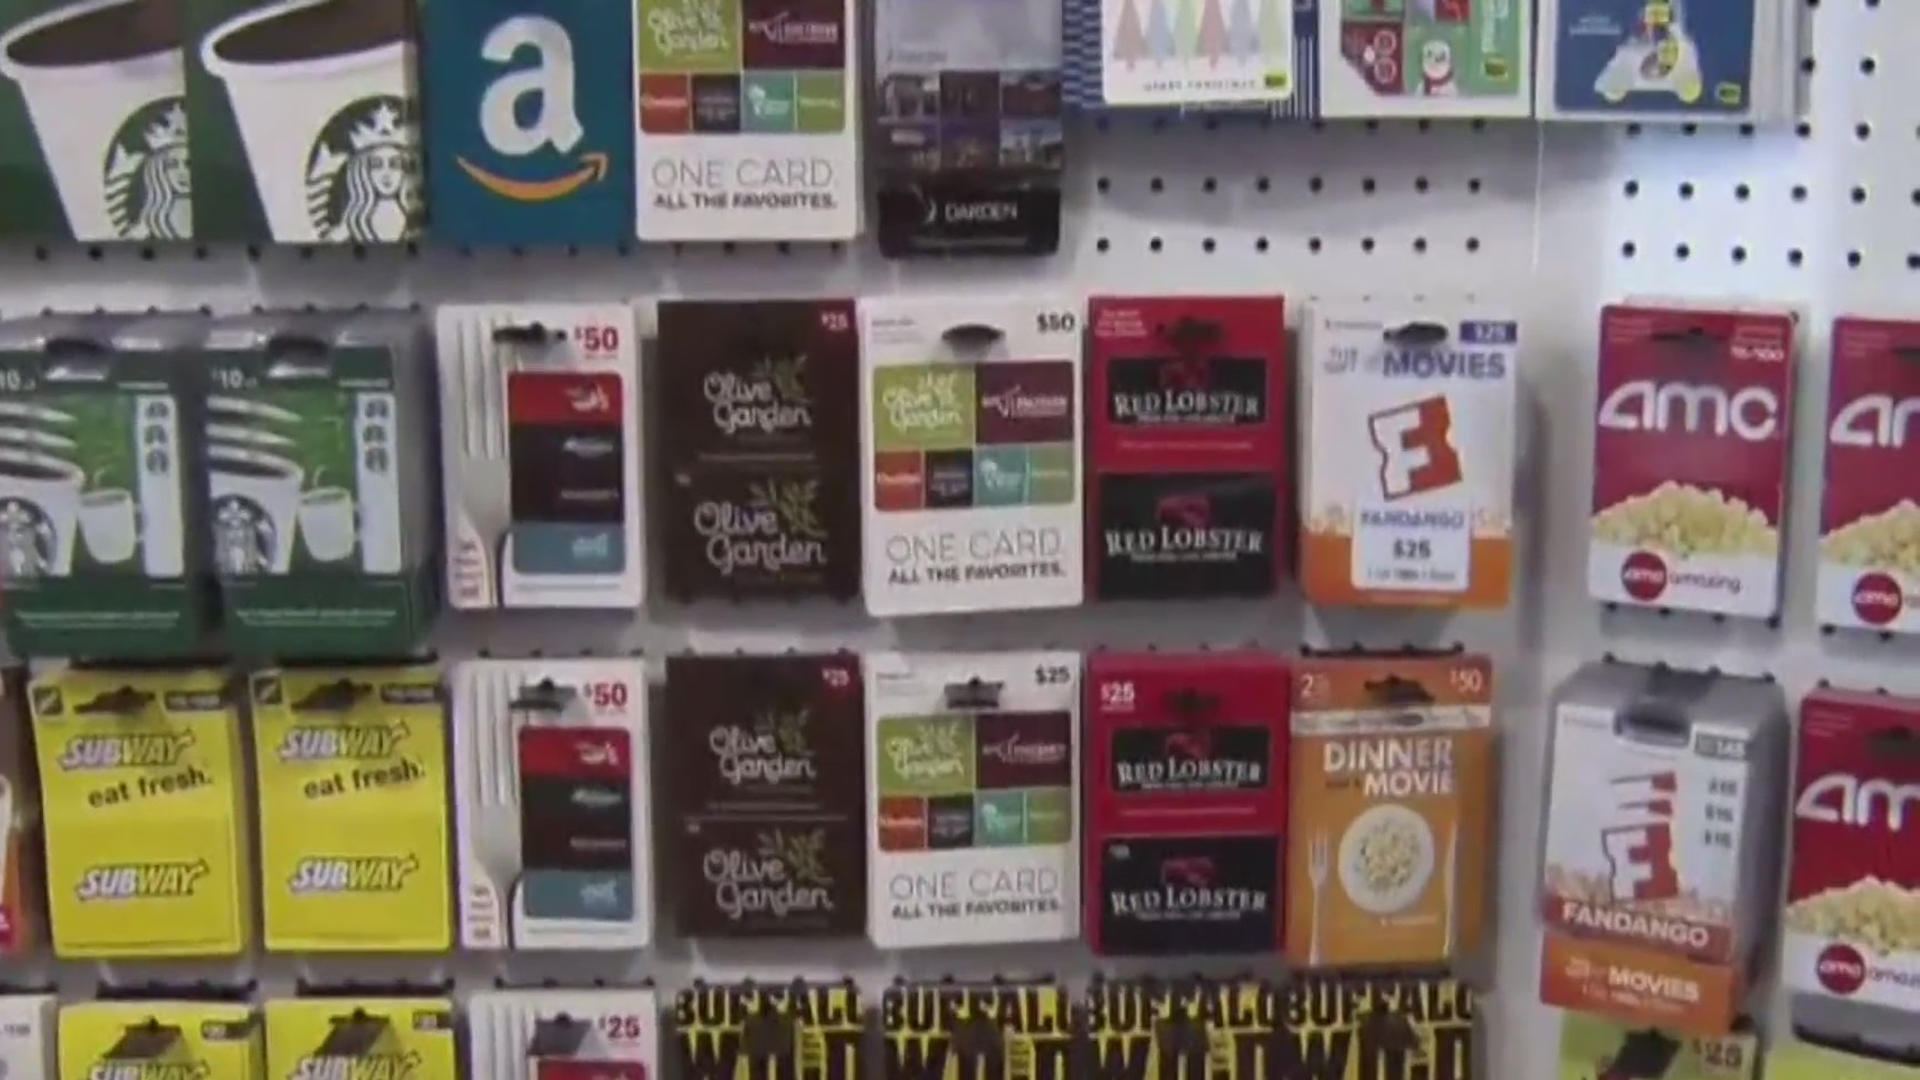 Americans sitting on unused gift cards worth $23 billion: Study